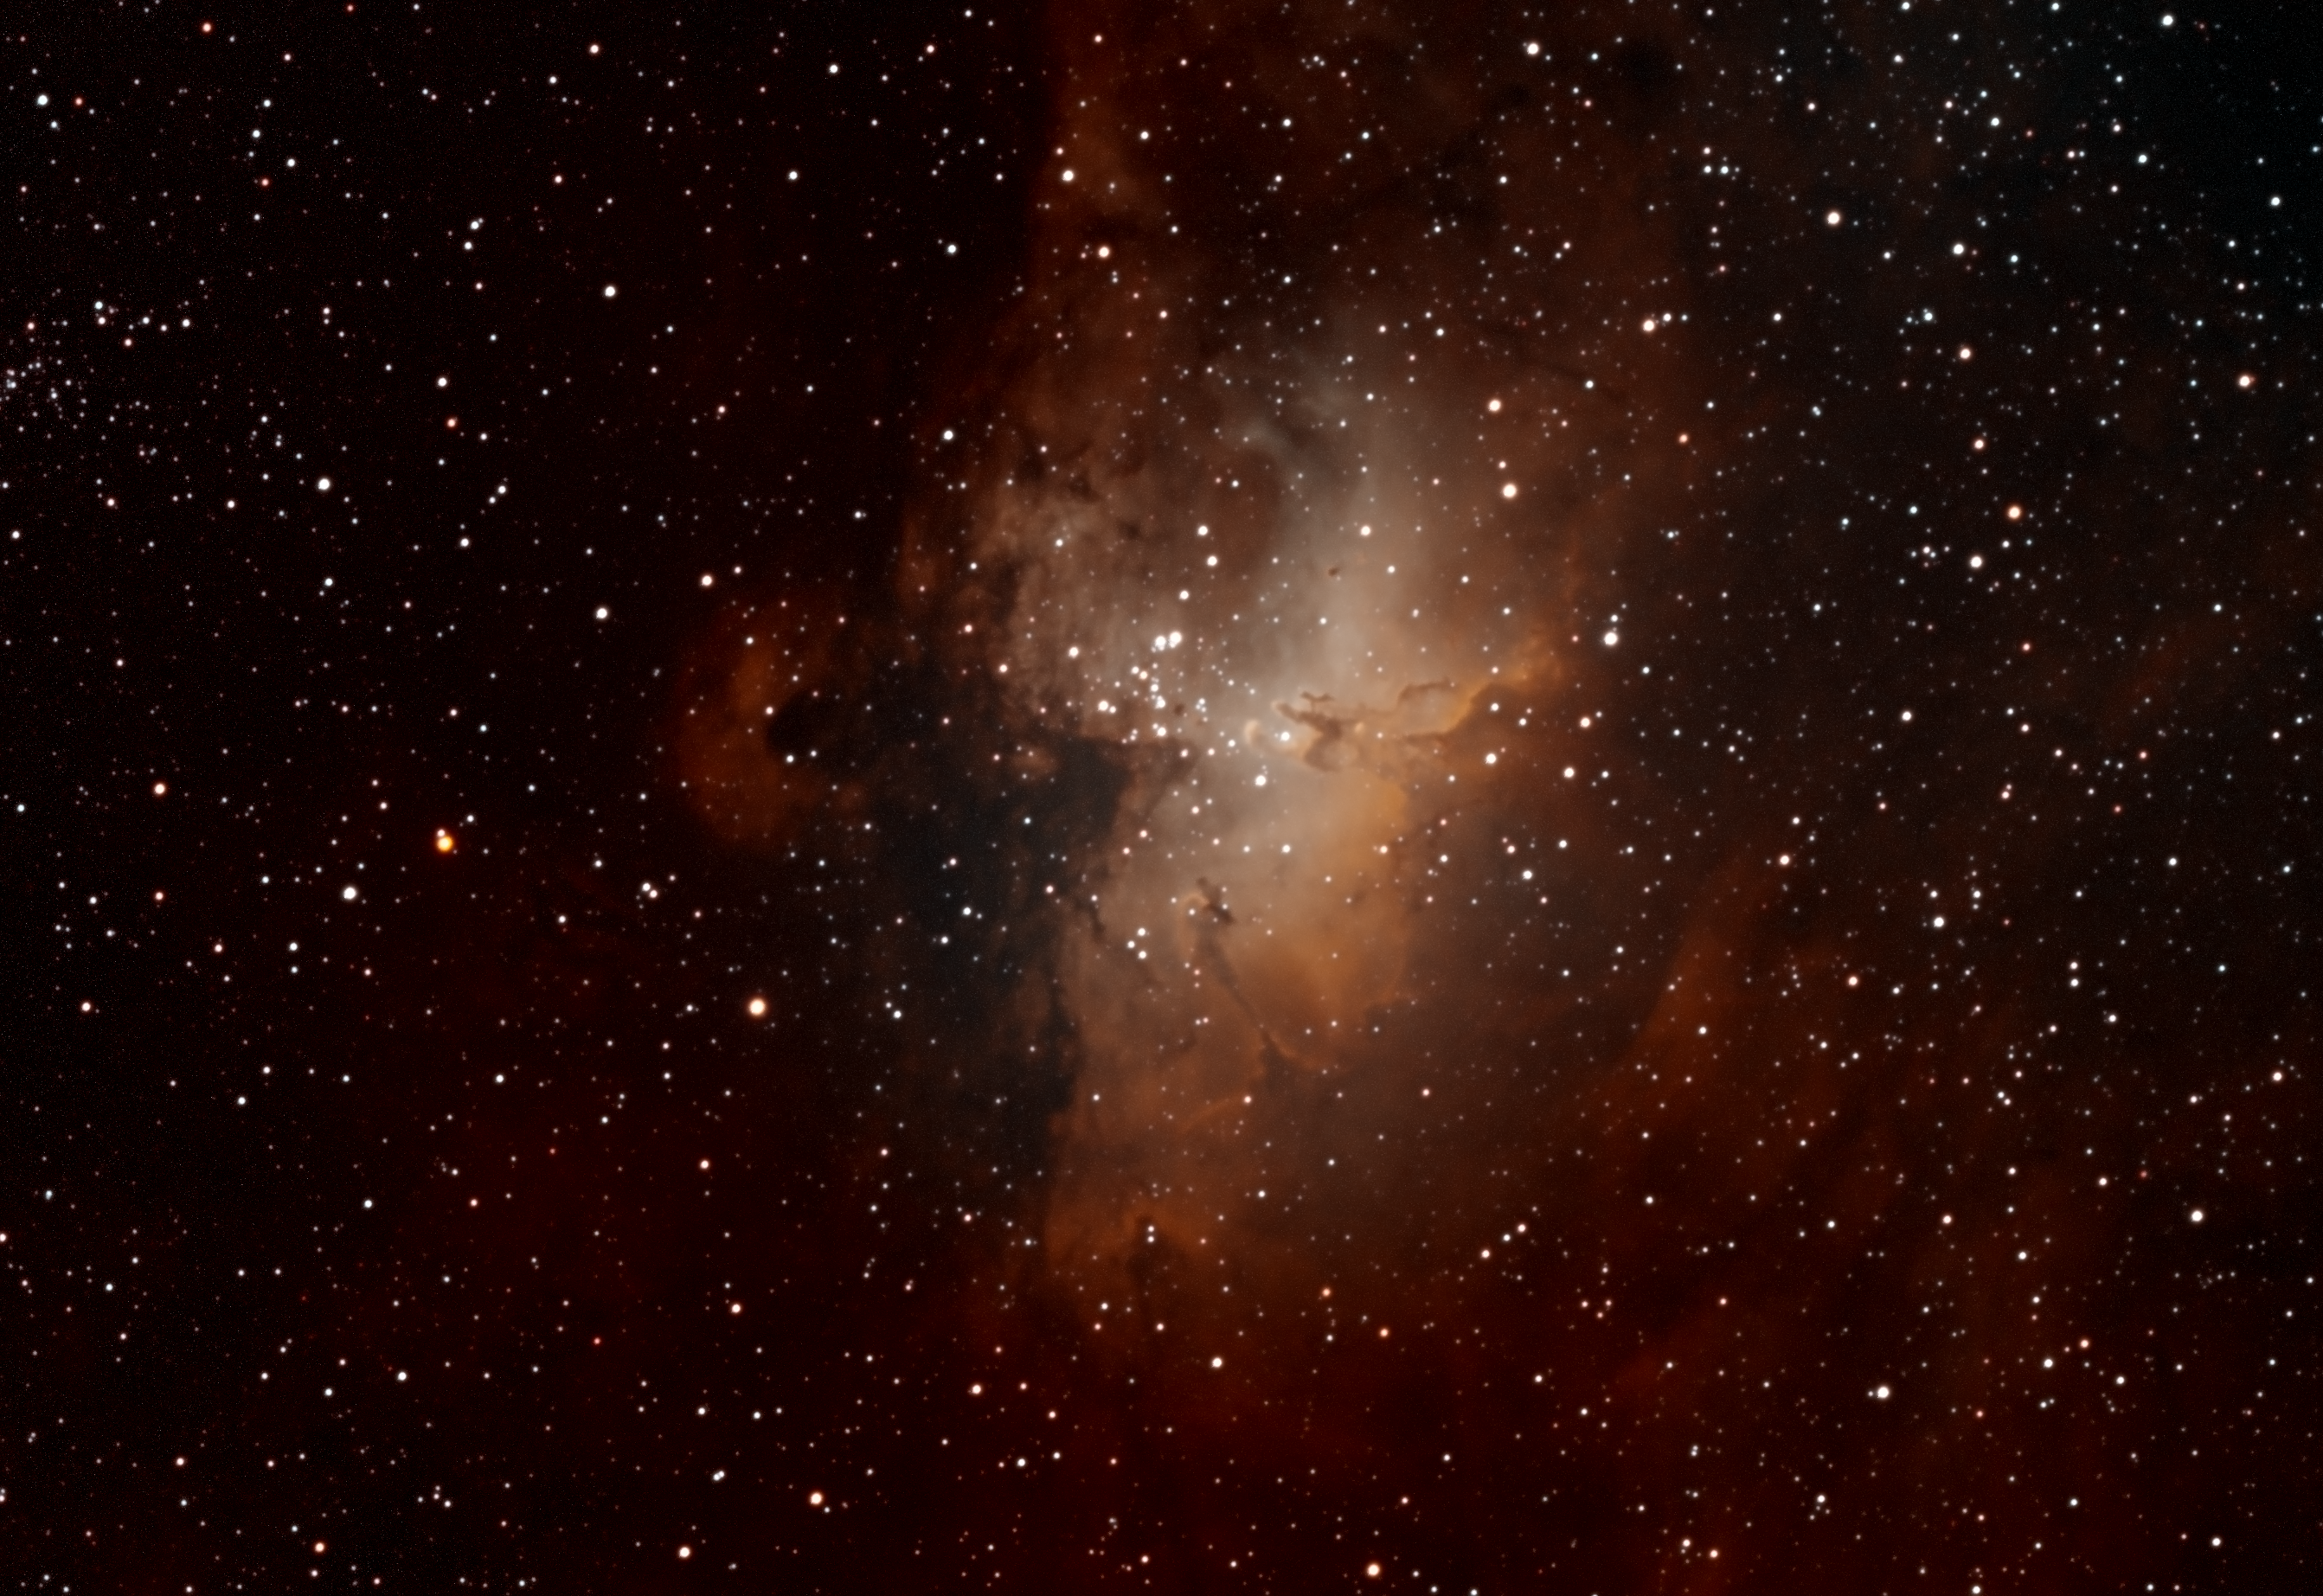 Eagle Nebula by Rob Musquetier